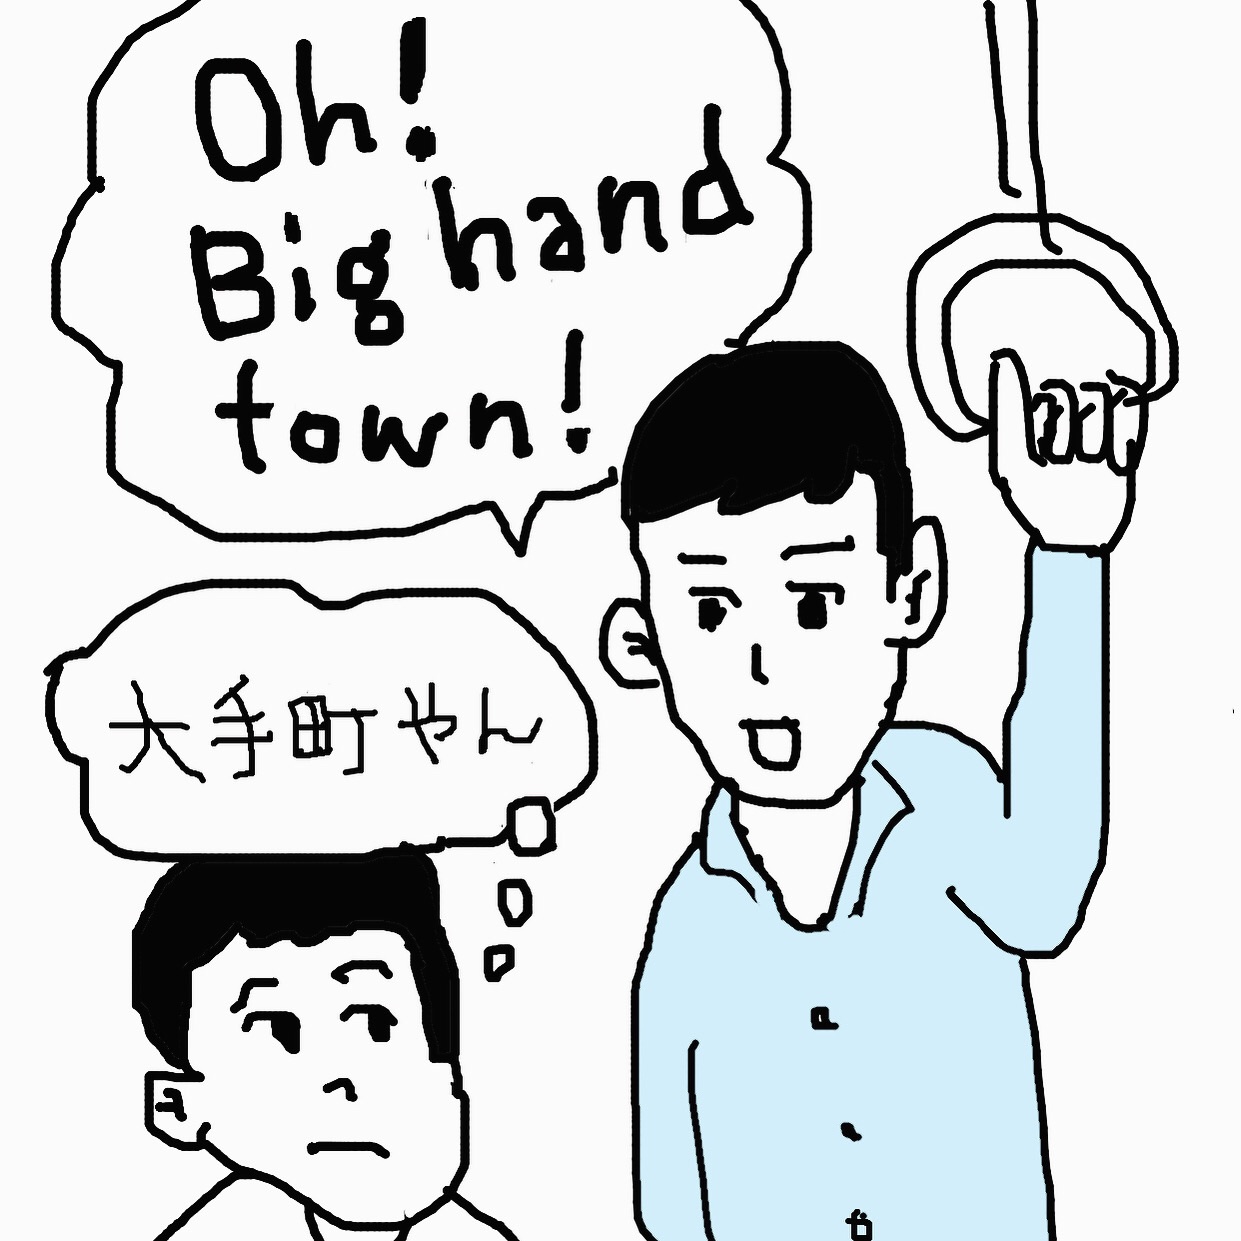 Big hand town